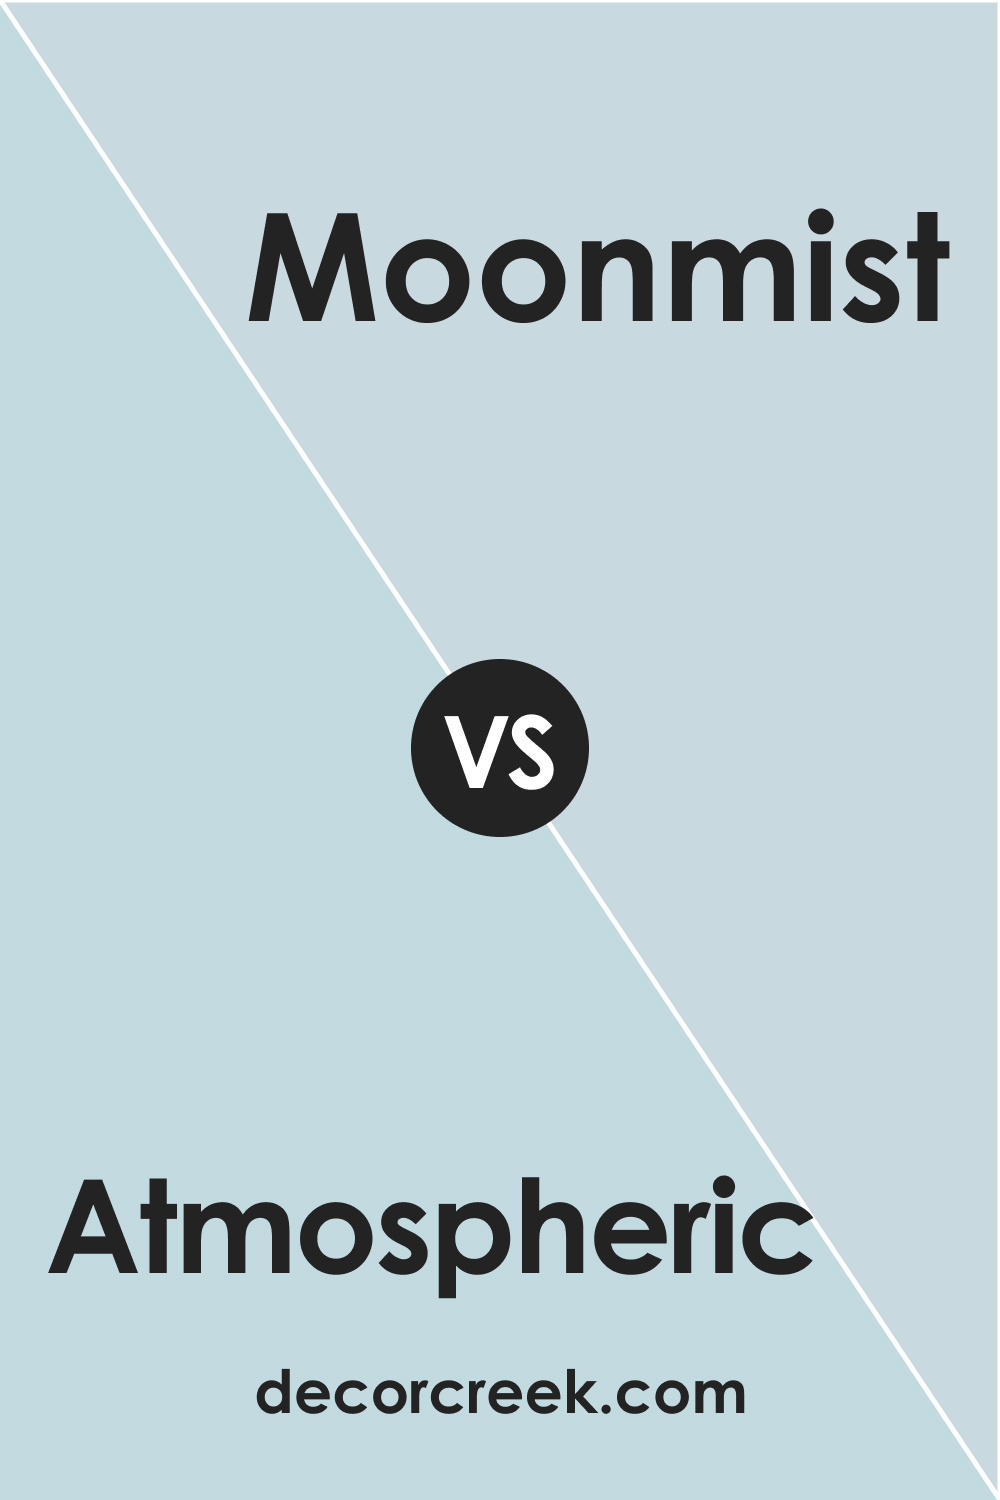 Atmospheric vs Moonmist